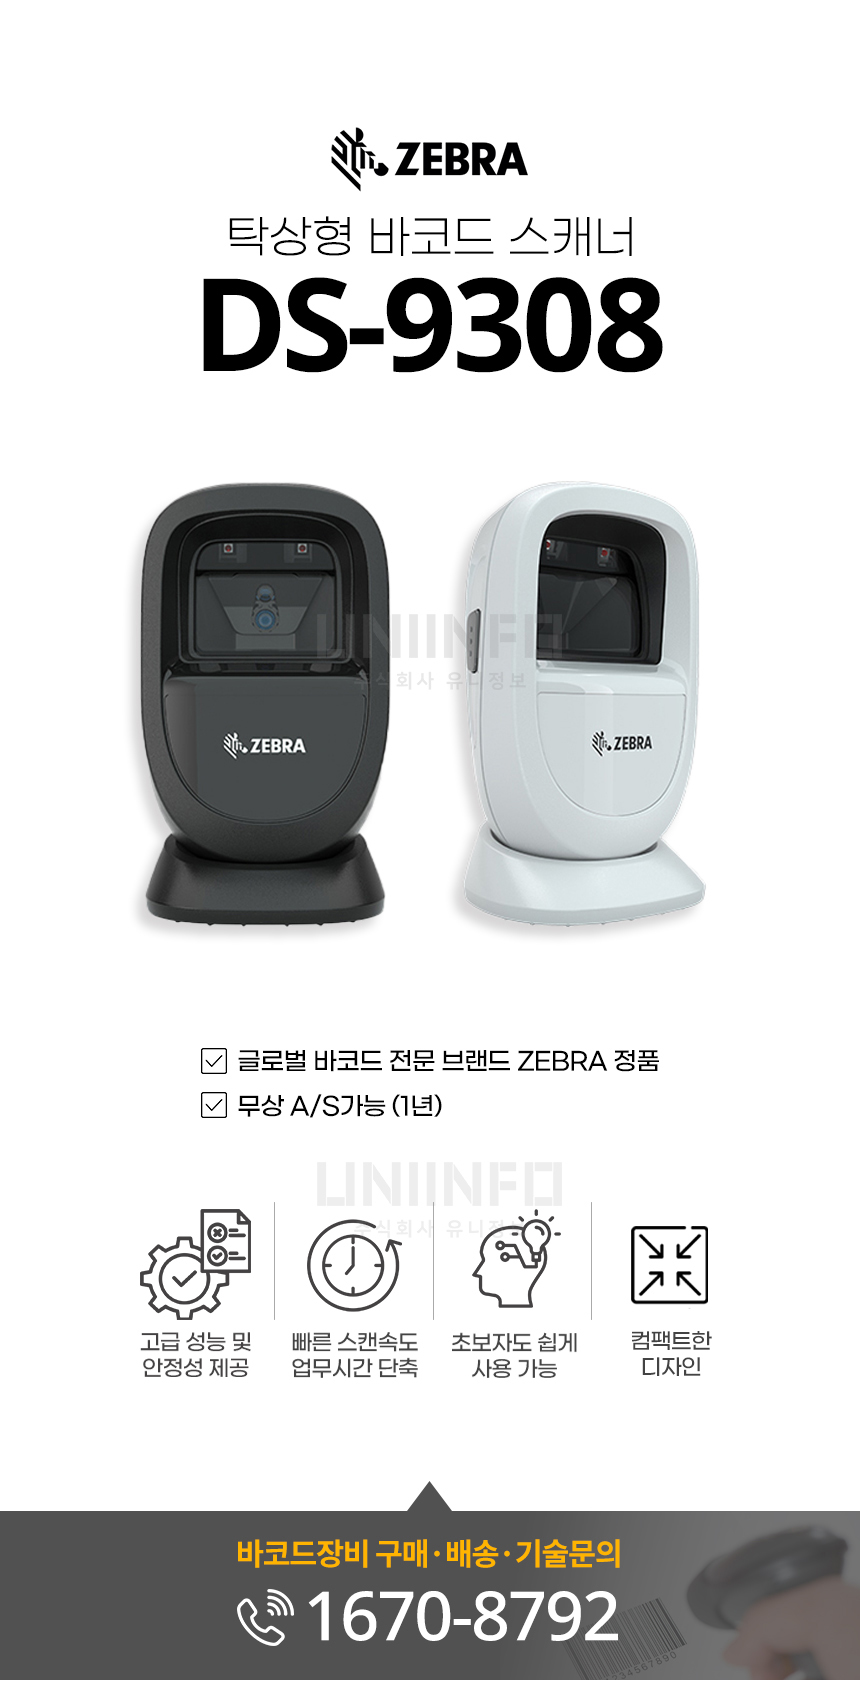 zebra 탁상형 바코드 스캐너 ds-9308 무상as 가능 1년 고성능 안정성 빠른 스캔 속도 컴팩트한 디자인 사용자 친화적